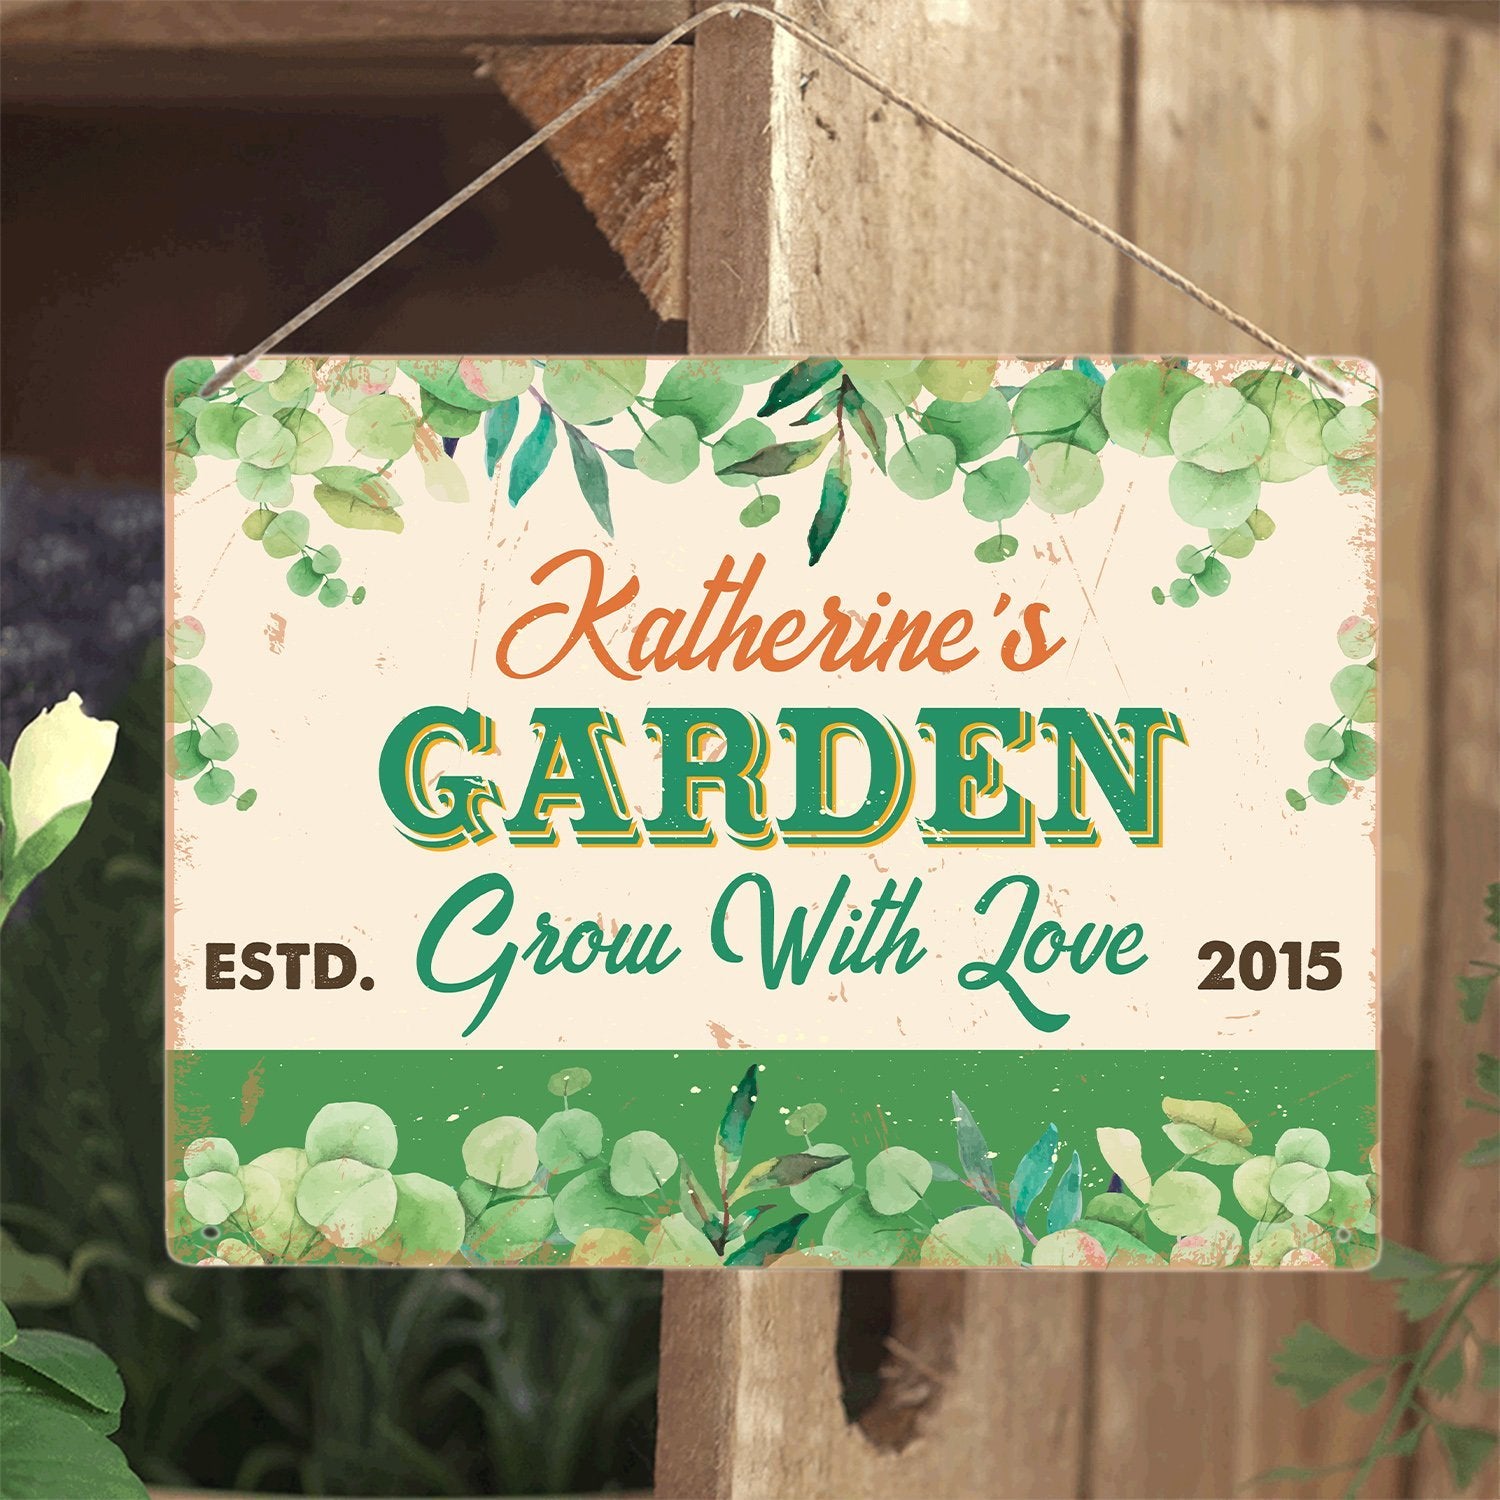 Customized Garden Sign, Grow With Love